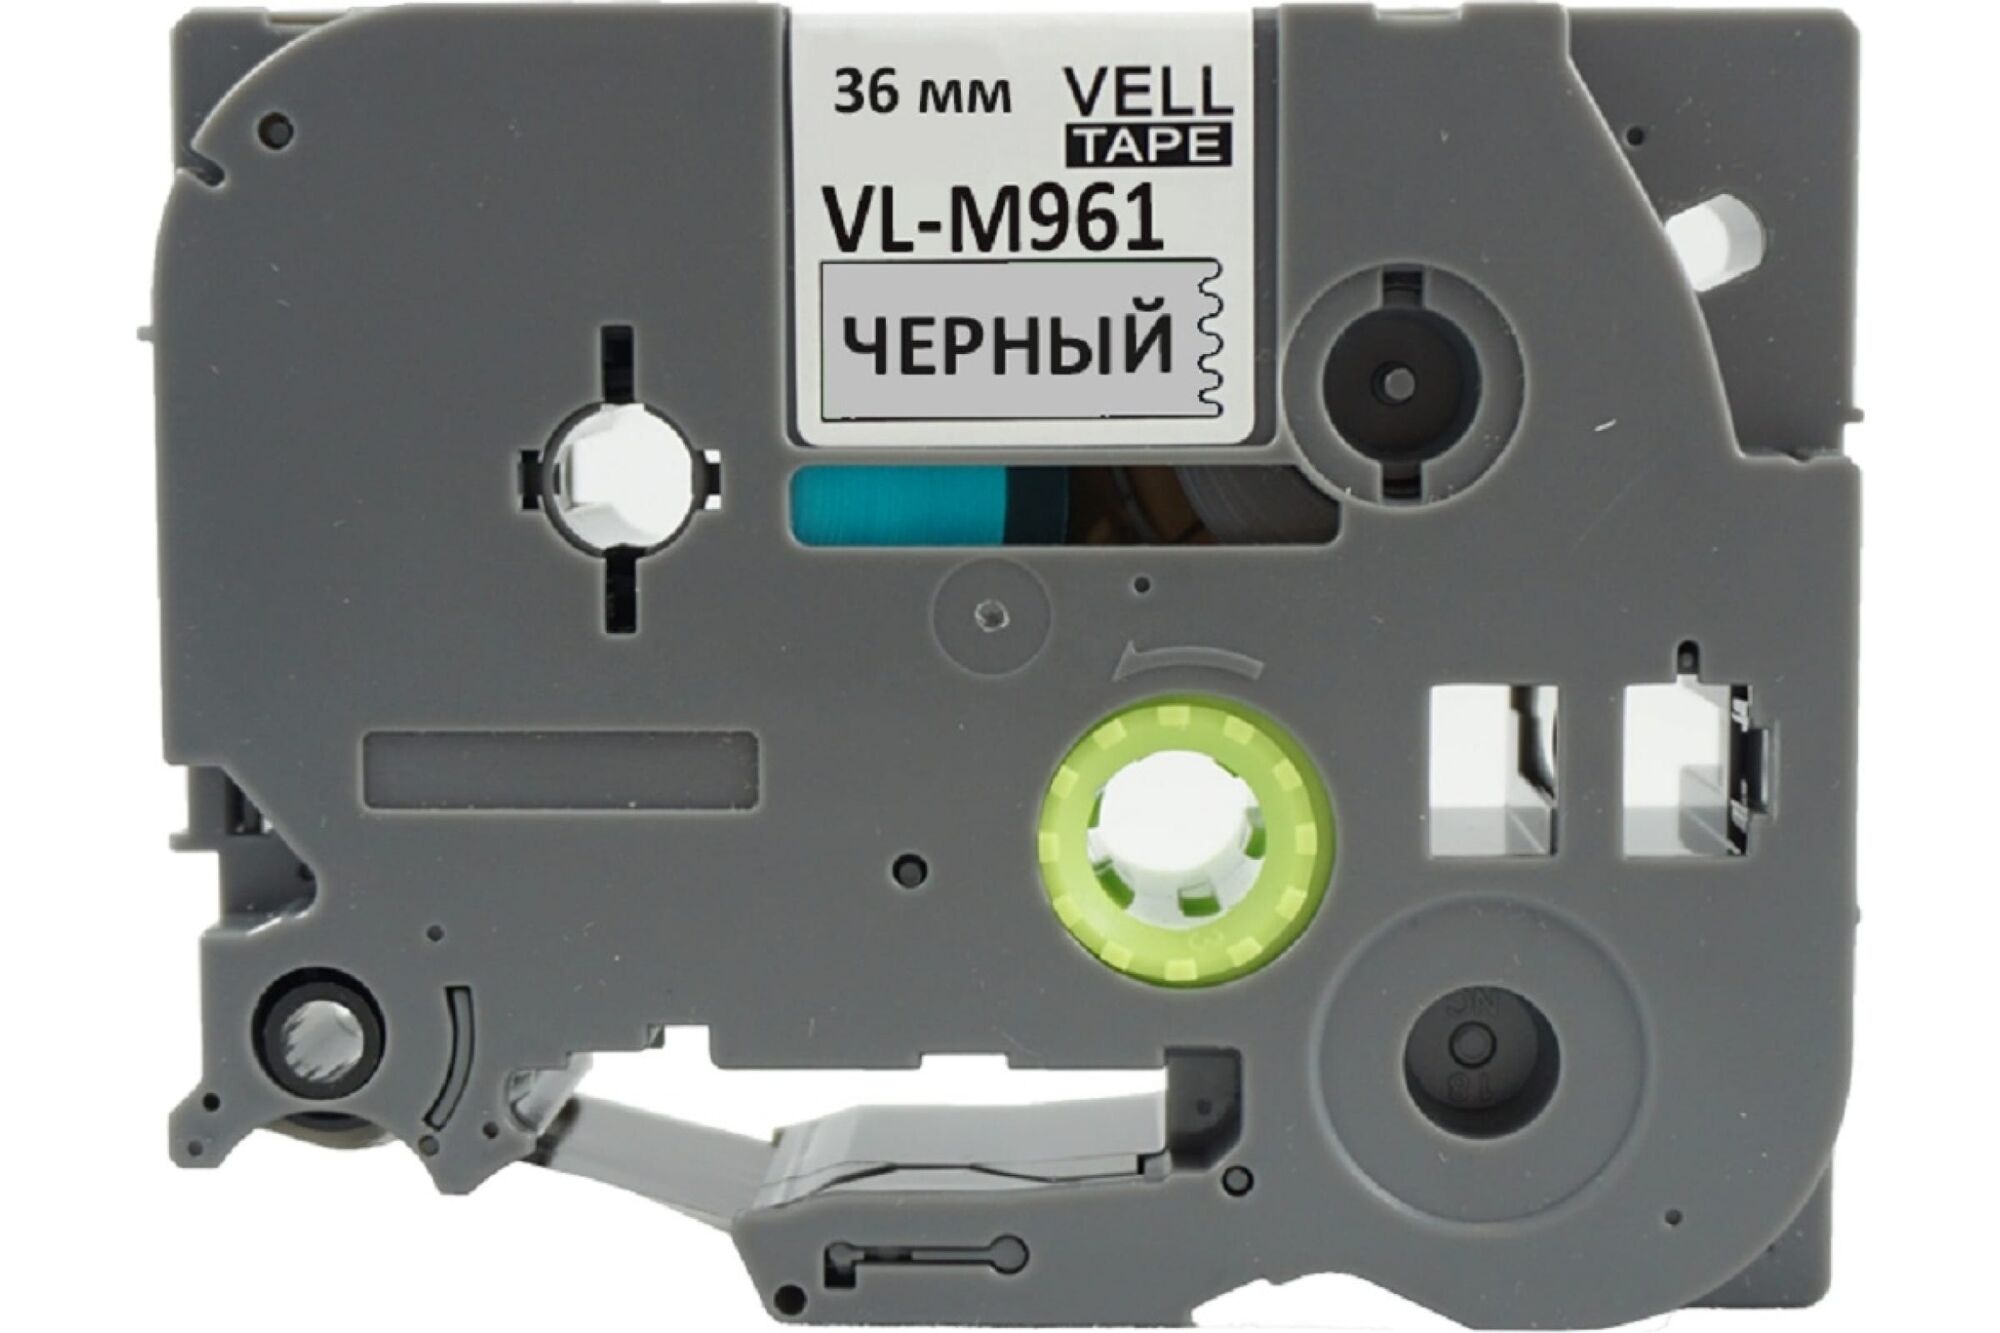 Лента Vell VL-M961 Brother TZE-M961, 36 мм, черный на металлизированном, для PT9700/P900W 319979